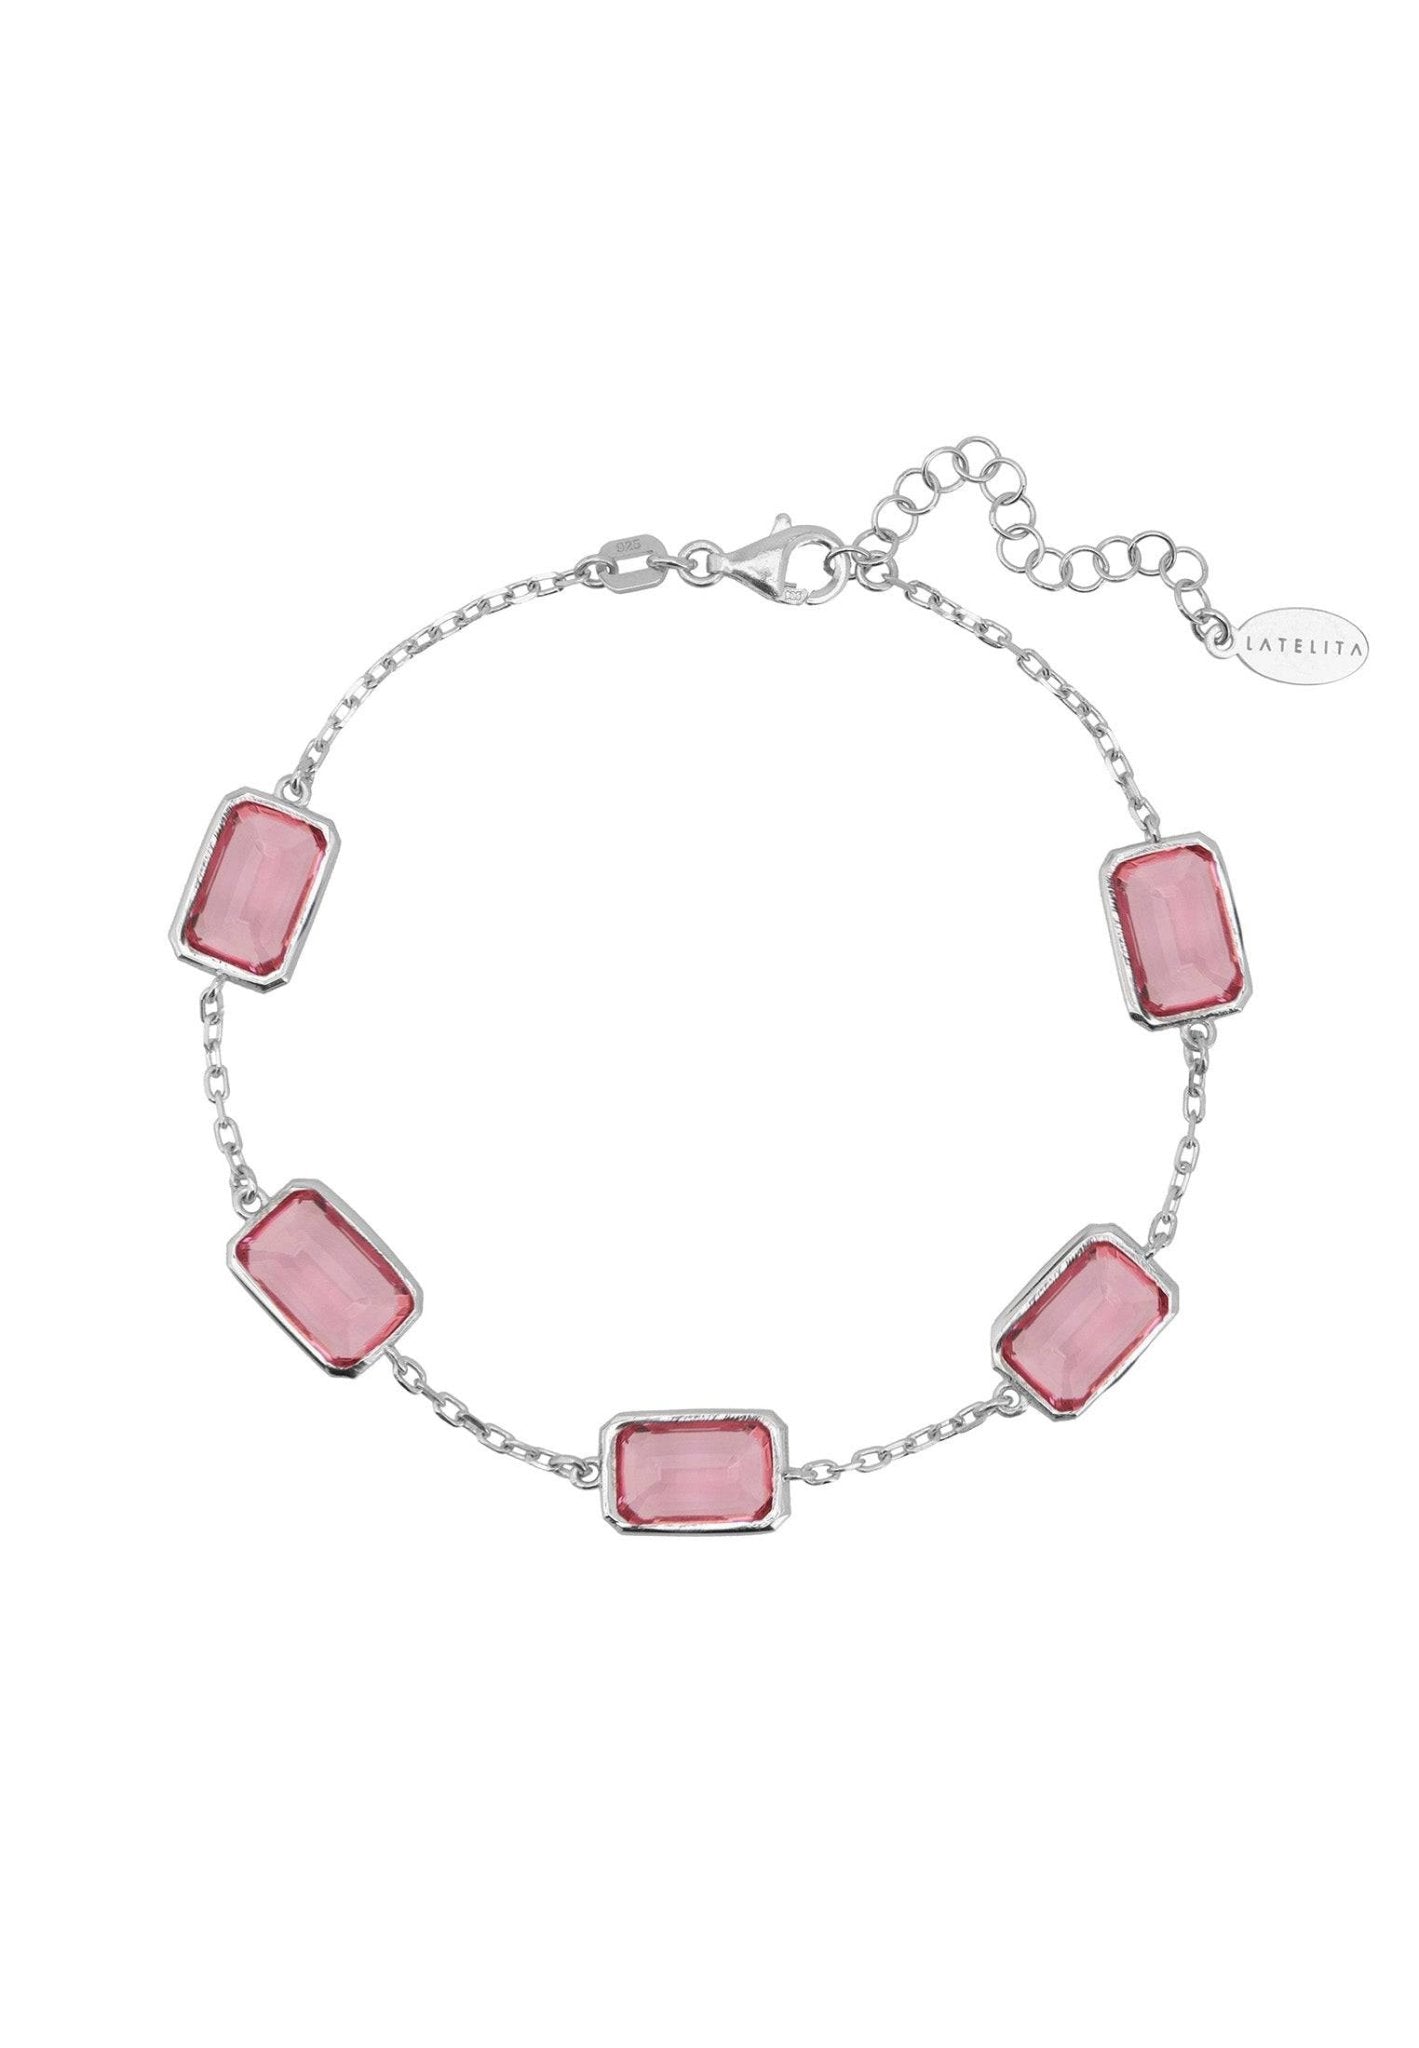 Portofino Bracelet Silver Pink Tourmaline - LATELITA Bracelets